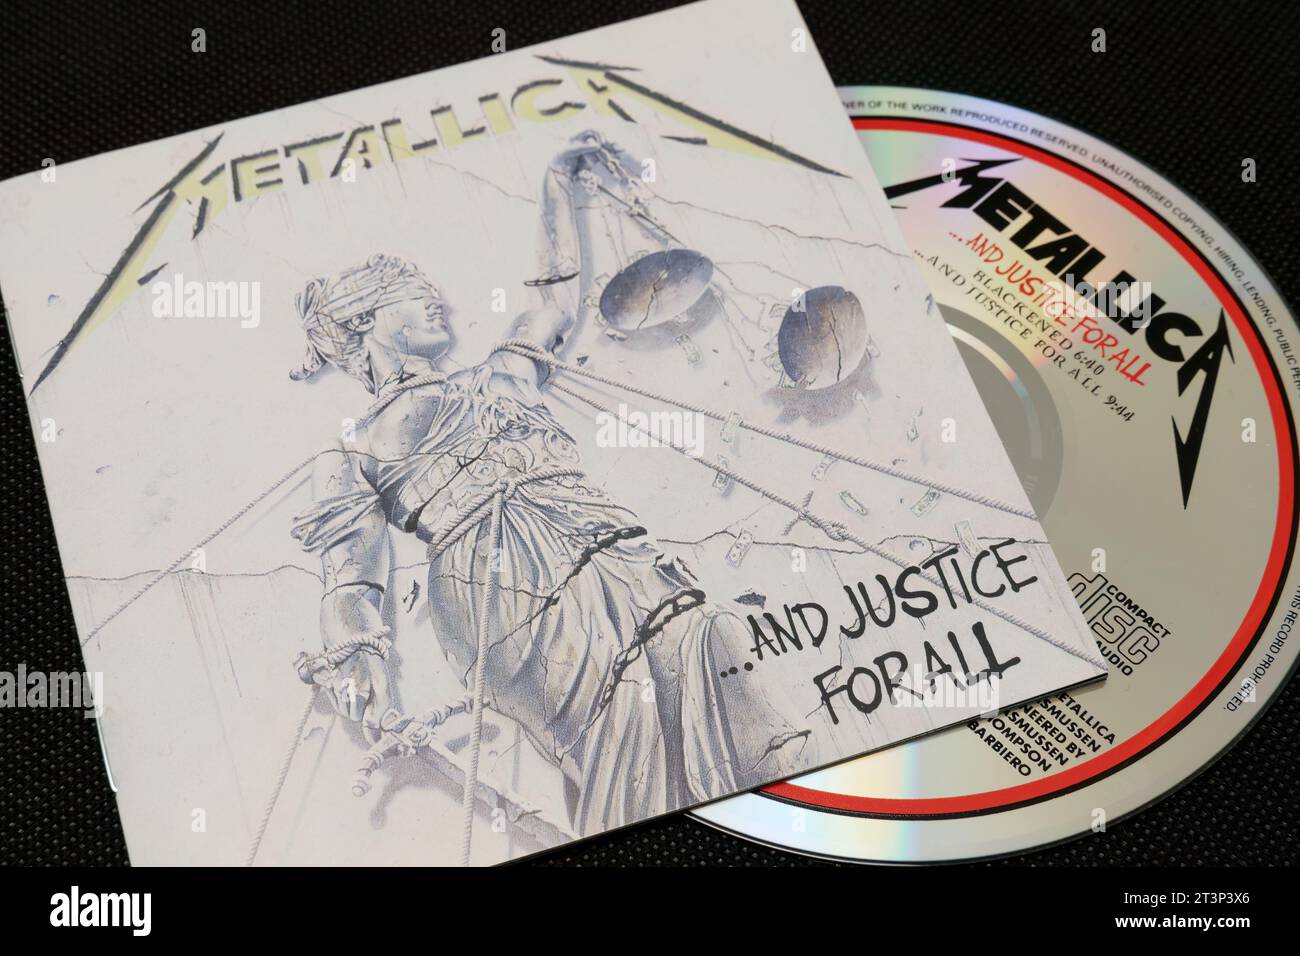 Metallica album hi-res stock photography and images - Alamy